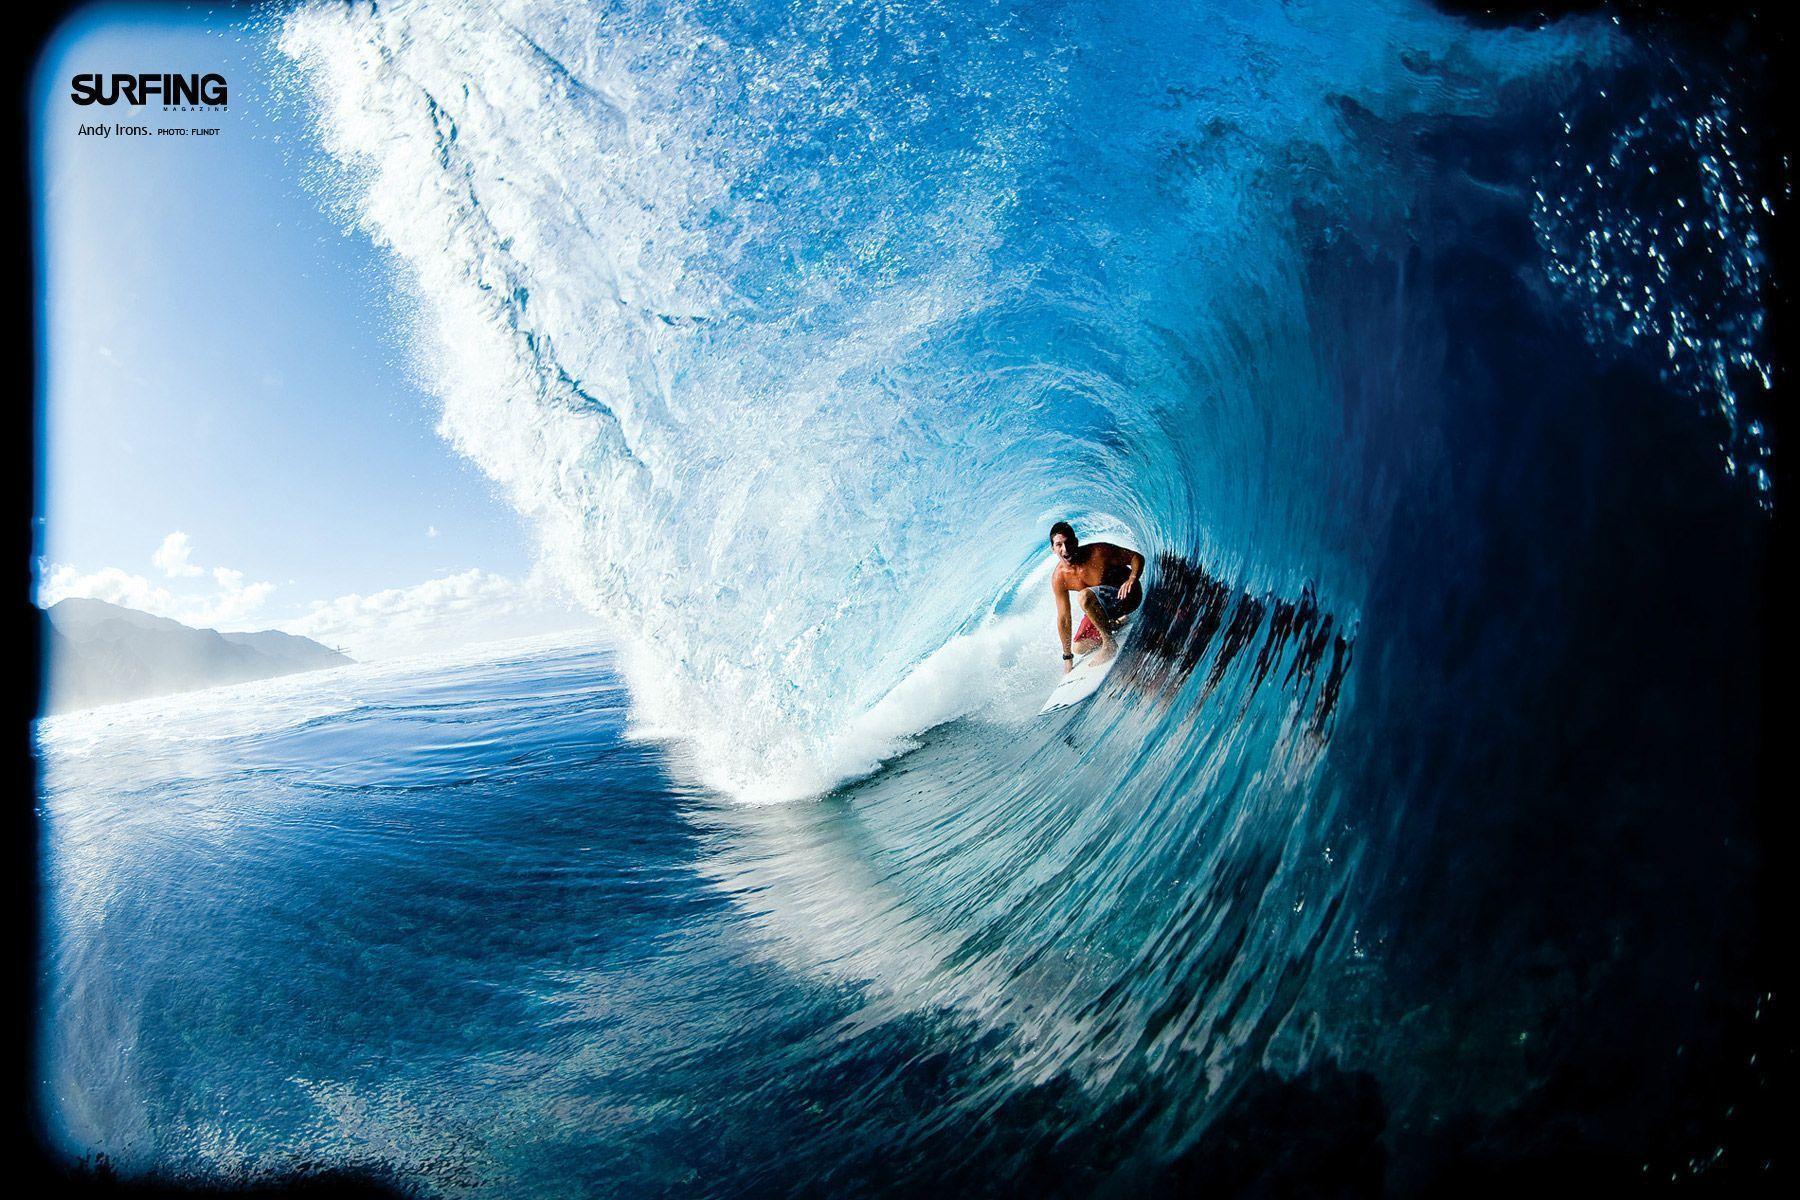 Sport: Men Amazing Surfer, surfing wallpaper, best surf wallpaper